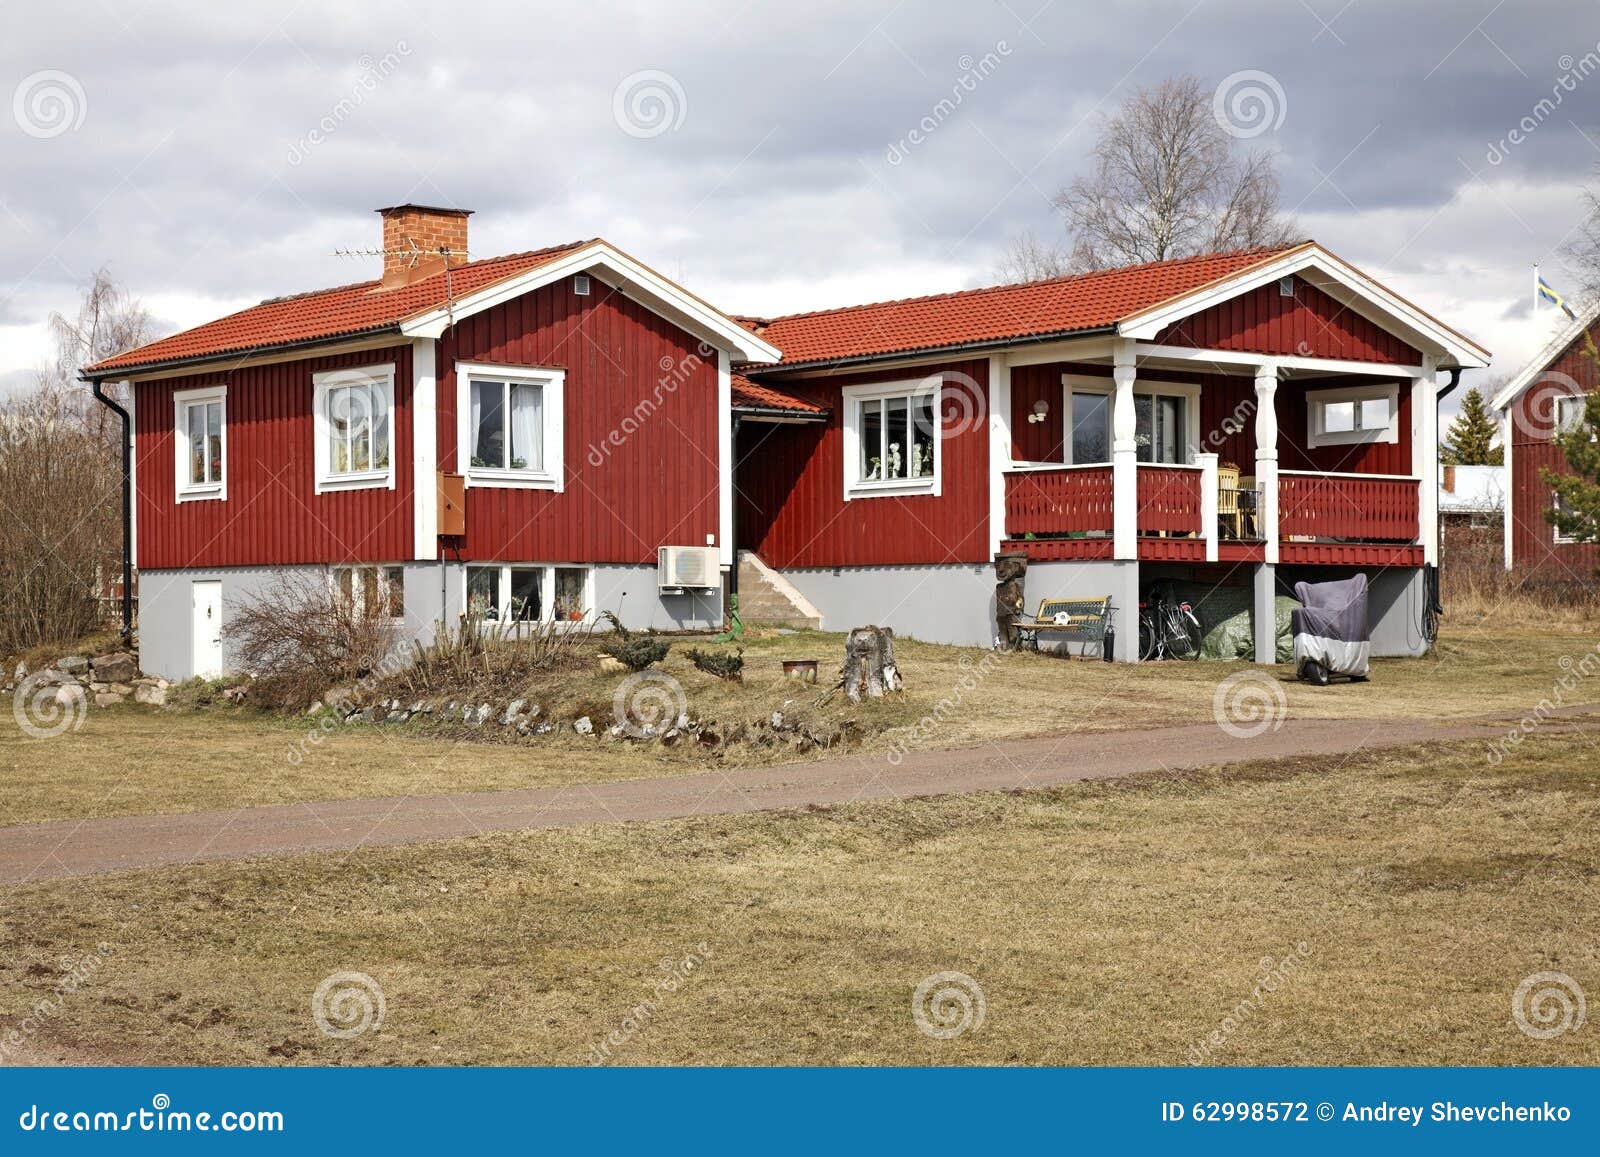 building in nusnas. dalarna county. sweden